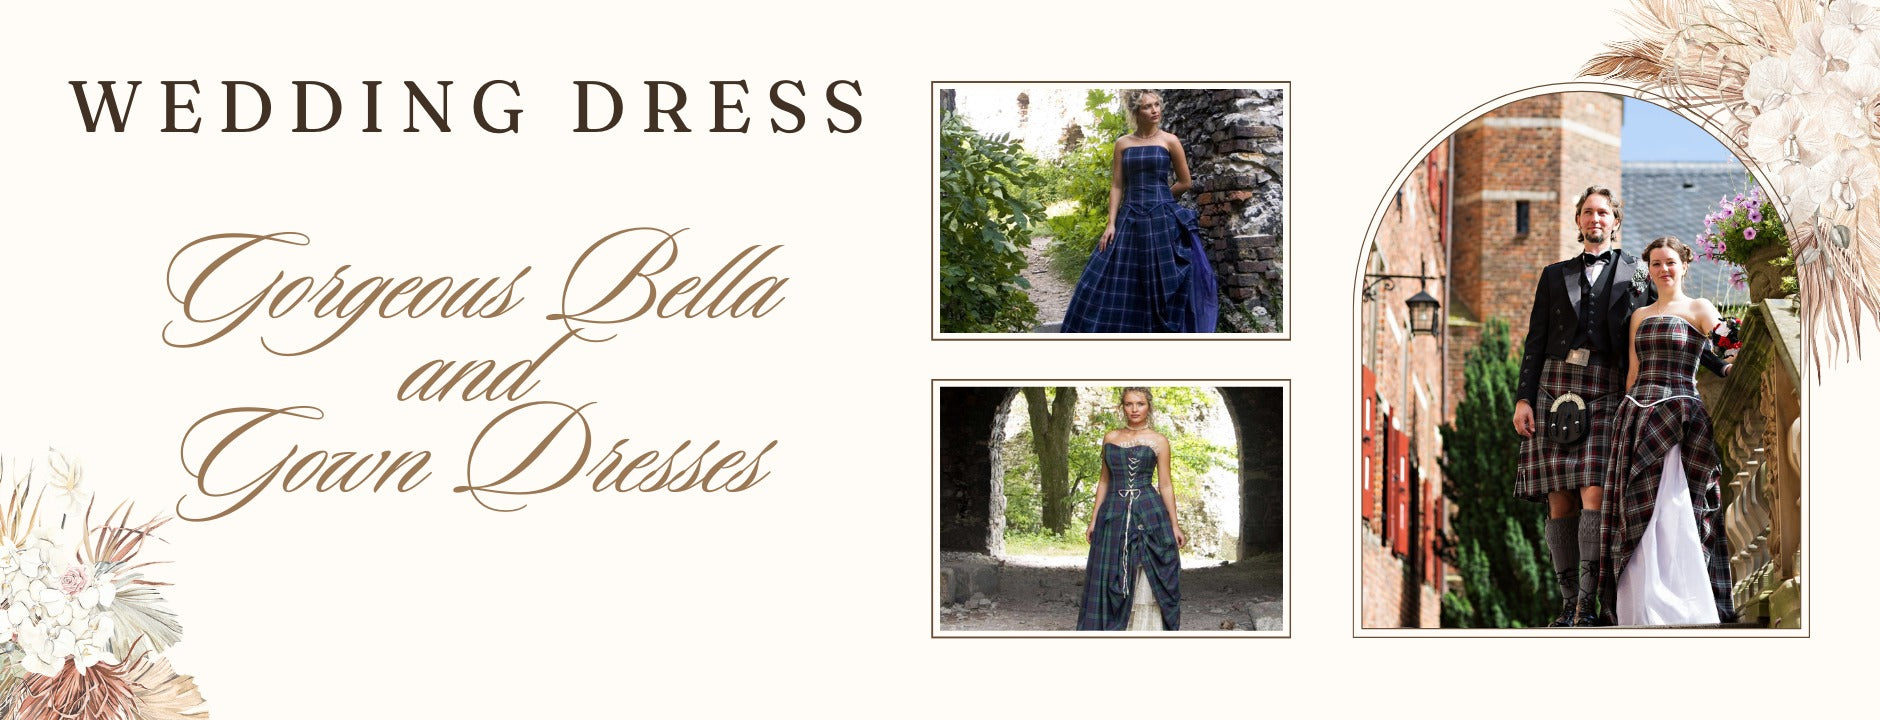 bella_tartan_wedding_dresses_-_i